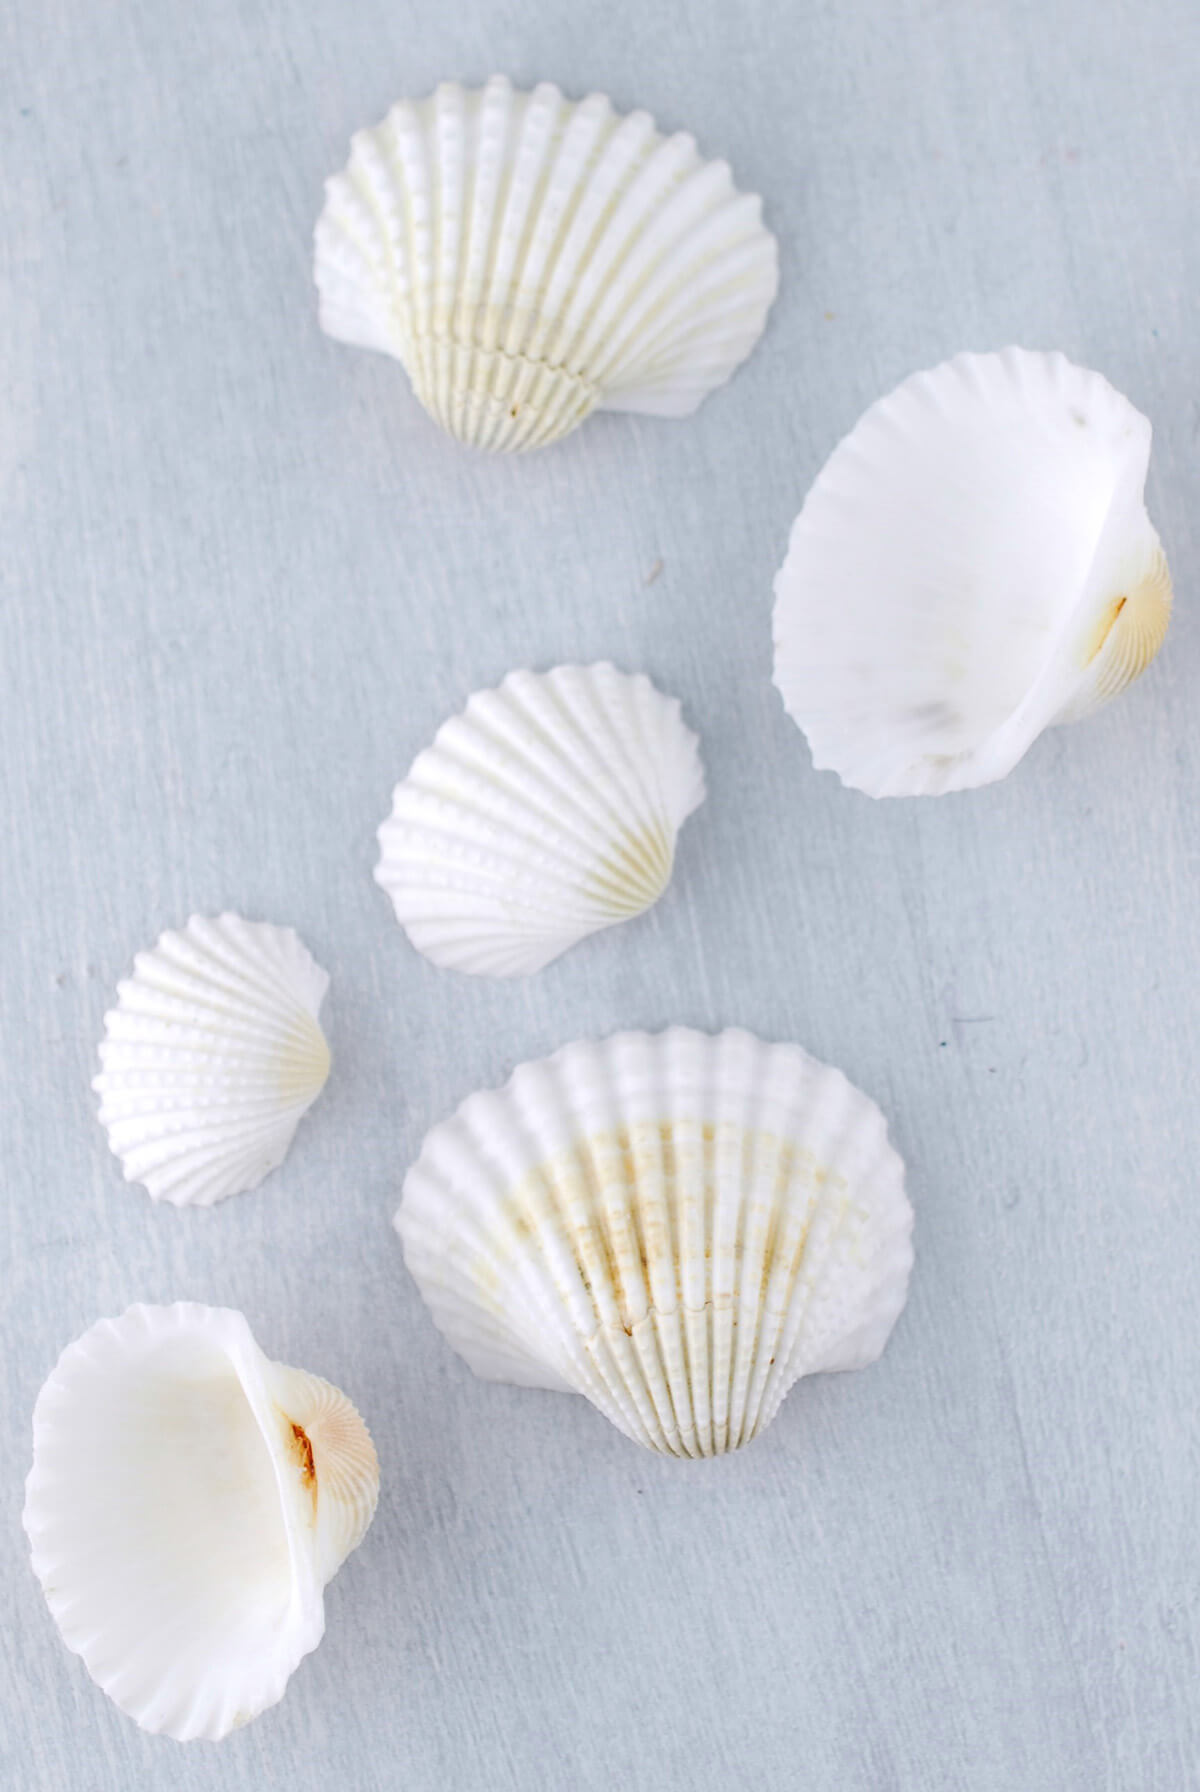 Shells photo